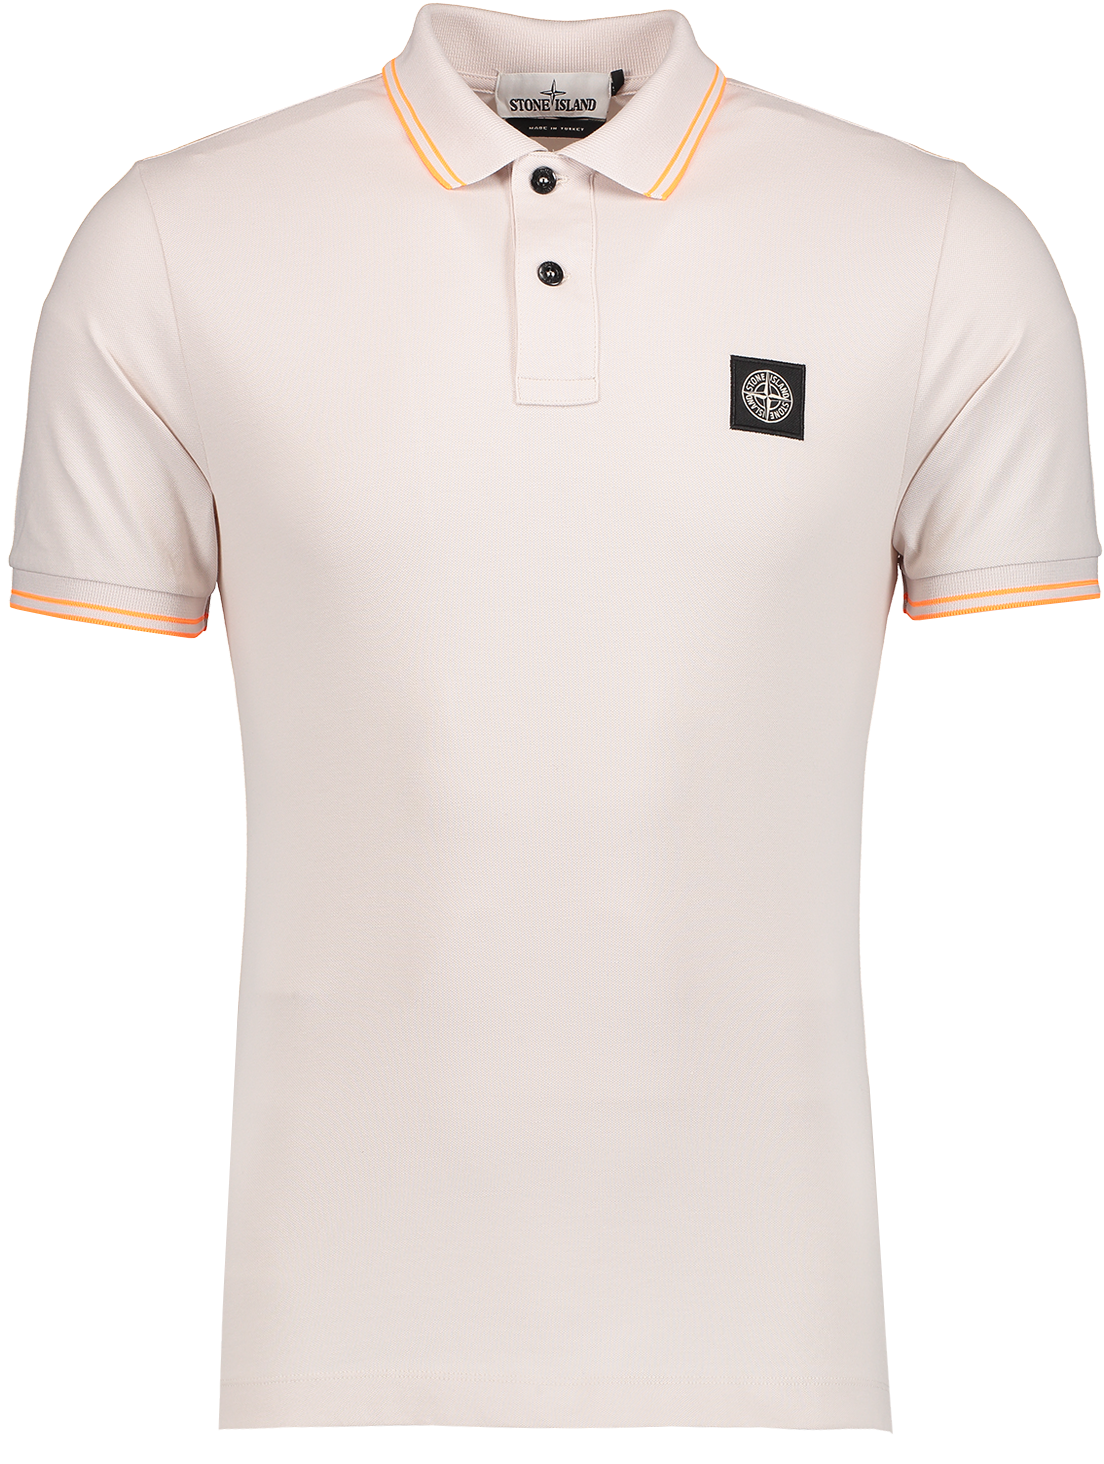 Designer Polo Shirt White Orange Trim PNG